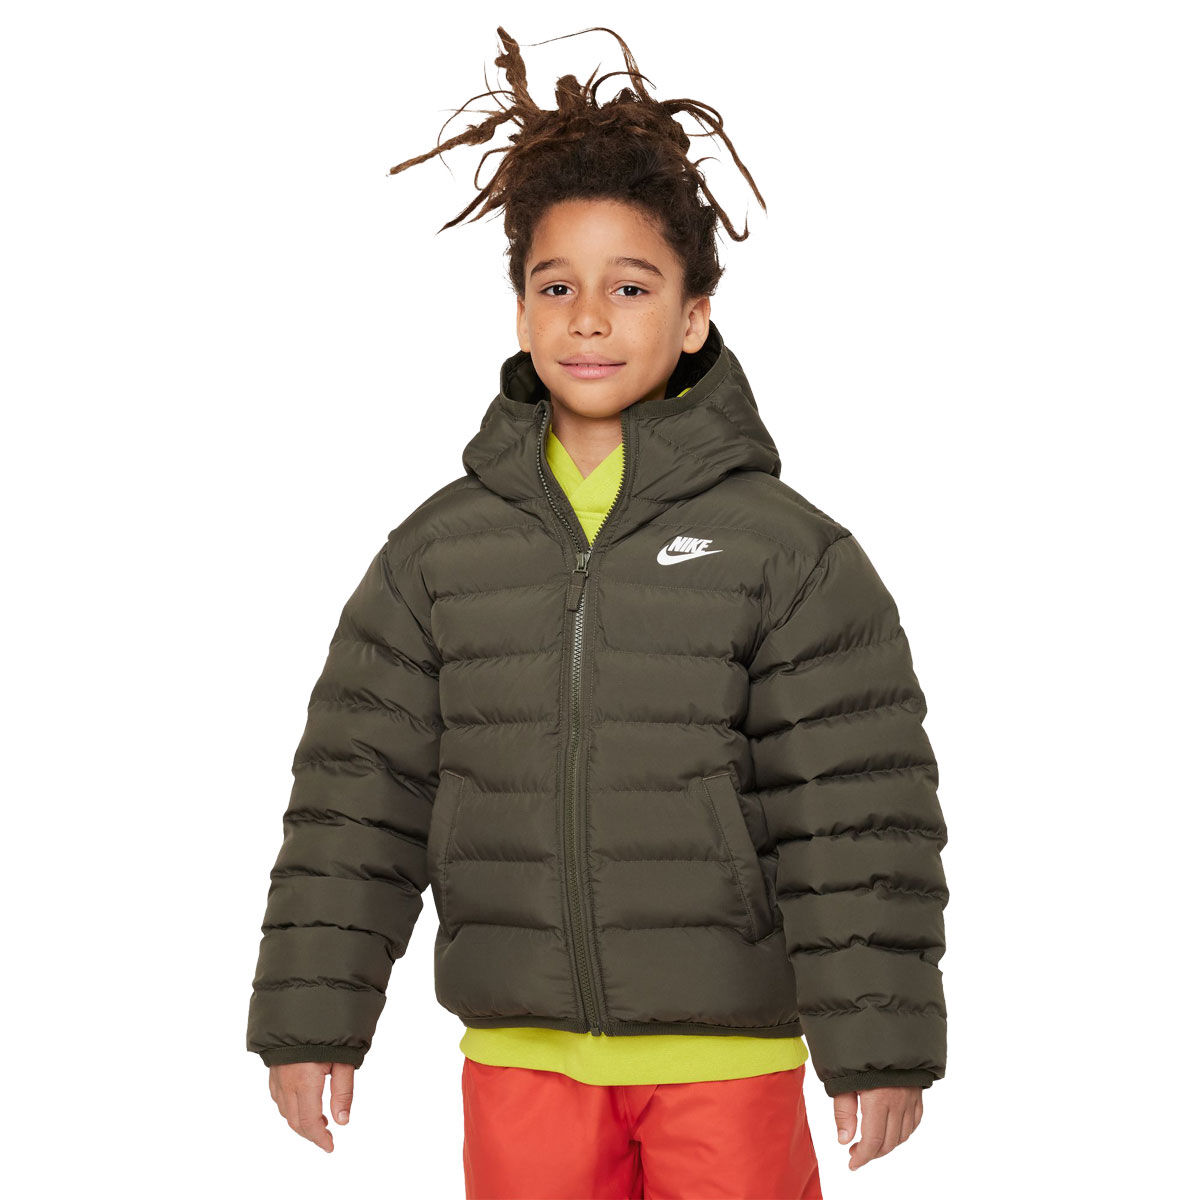 Kids Outdoor Winter Clothing | Ski & Snow | rebel